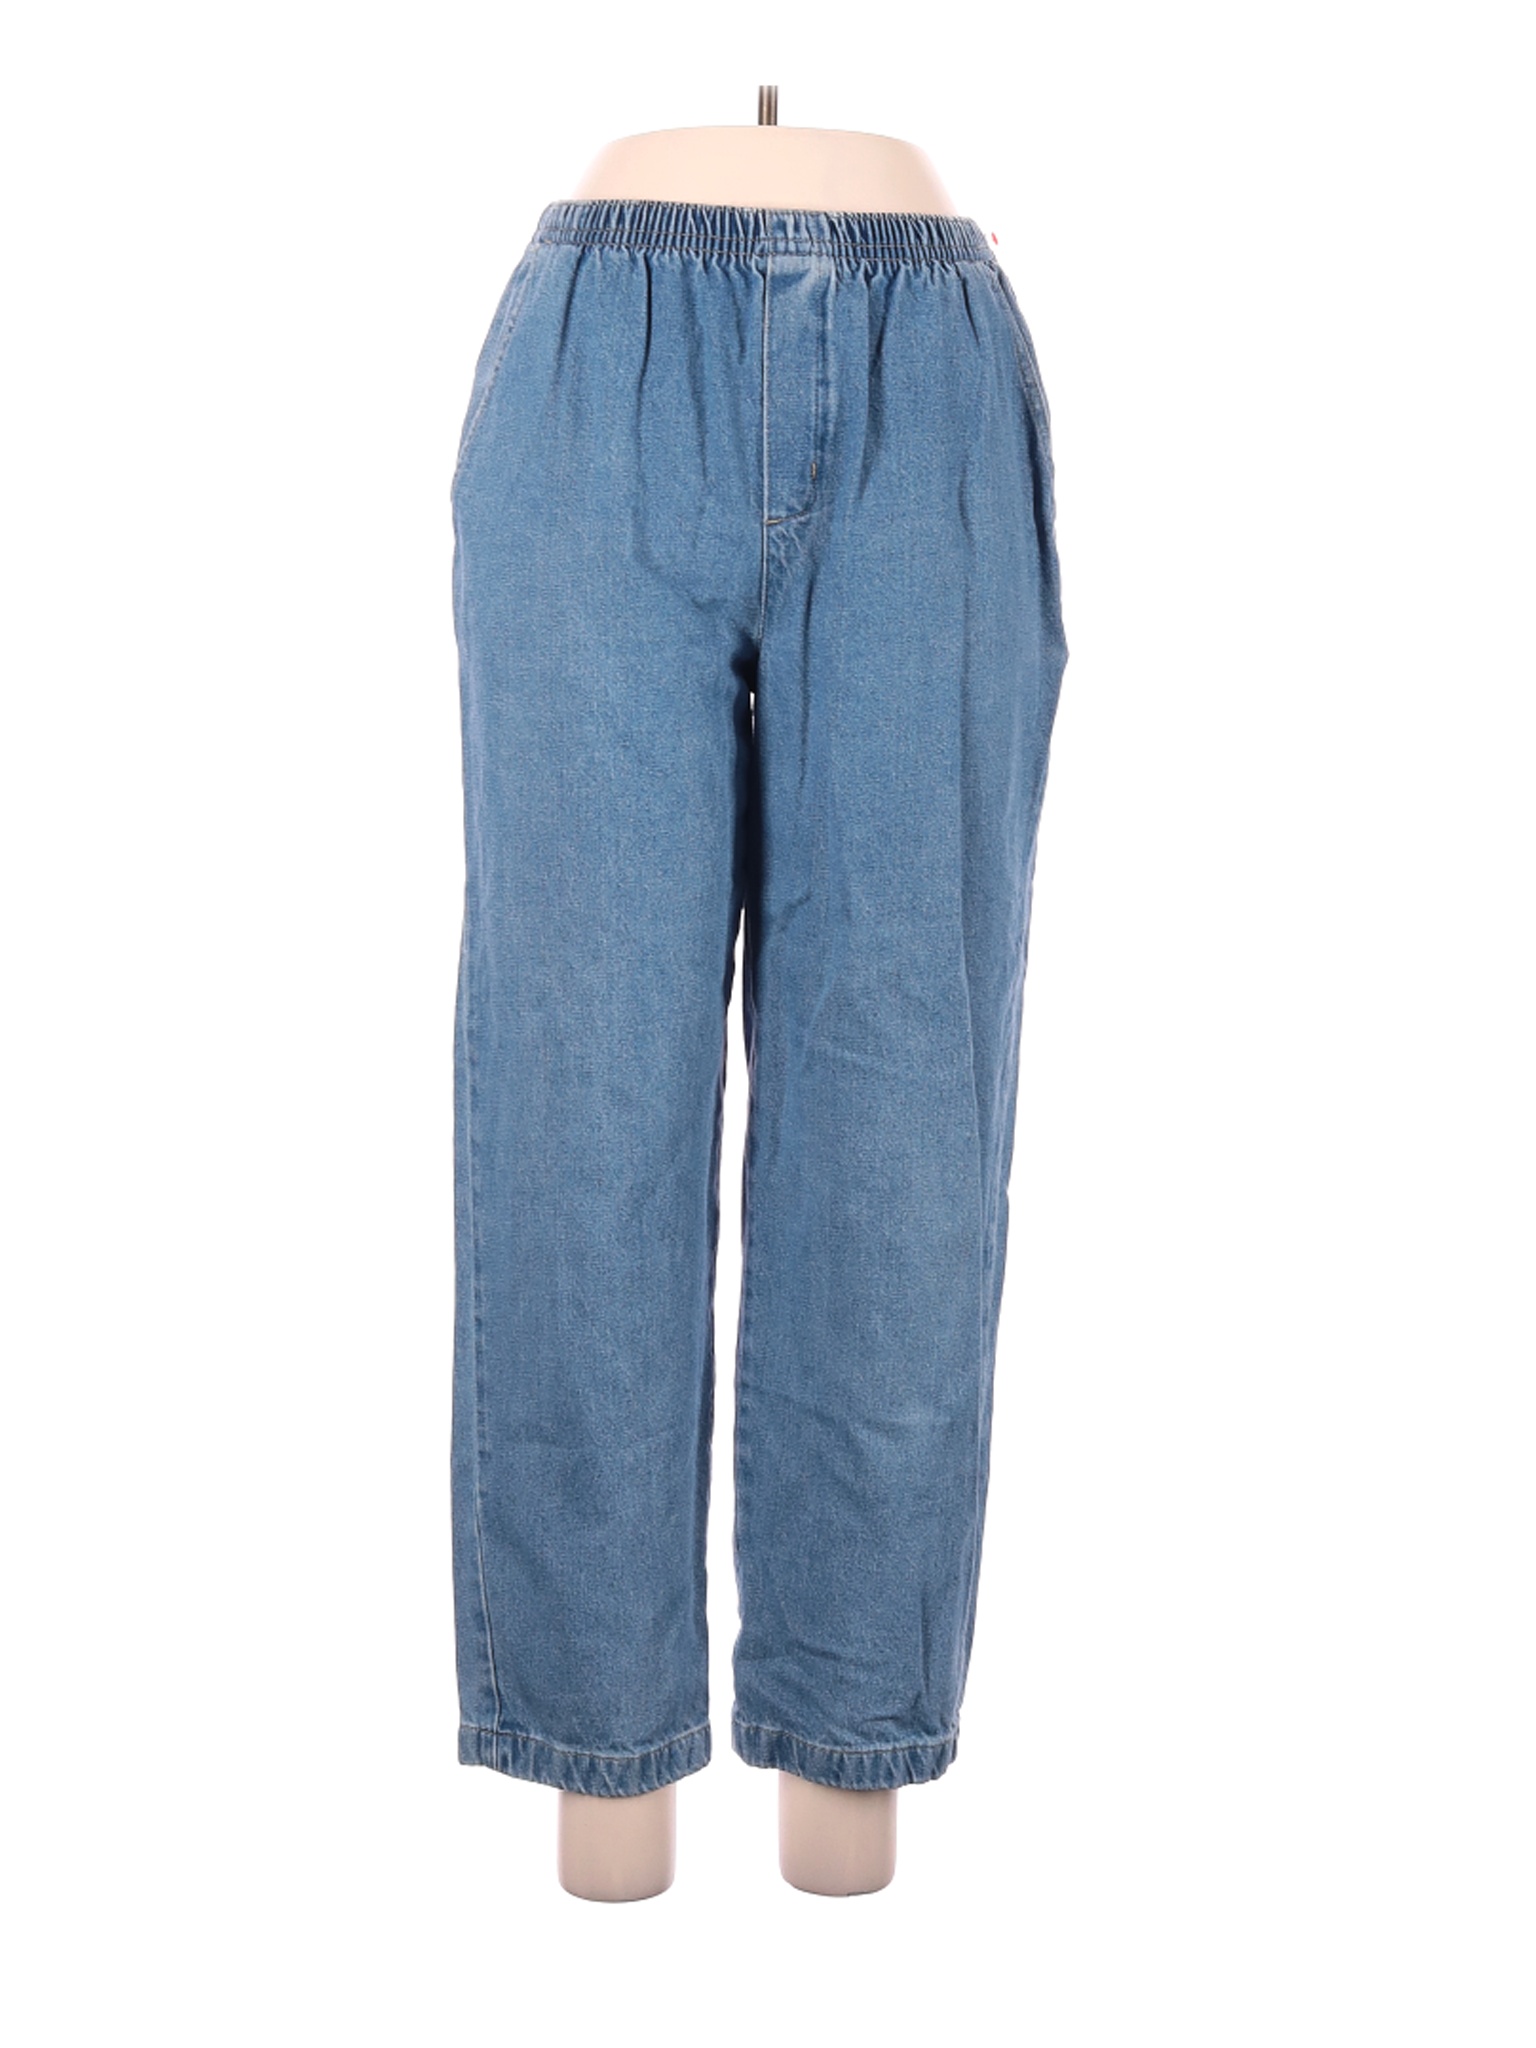 Cabin Creek Women Blue Casual Pants 8 Petites | eBay